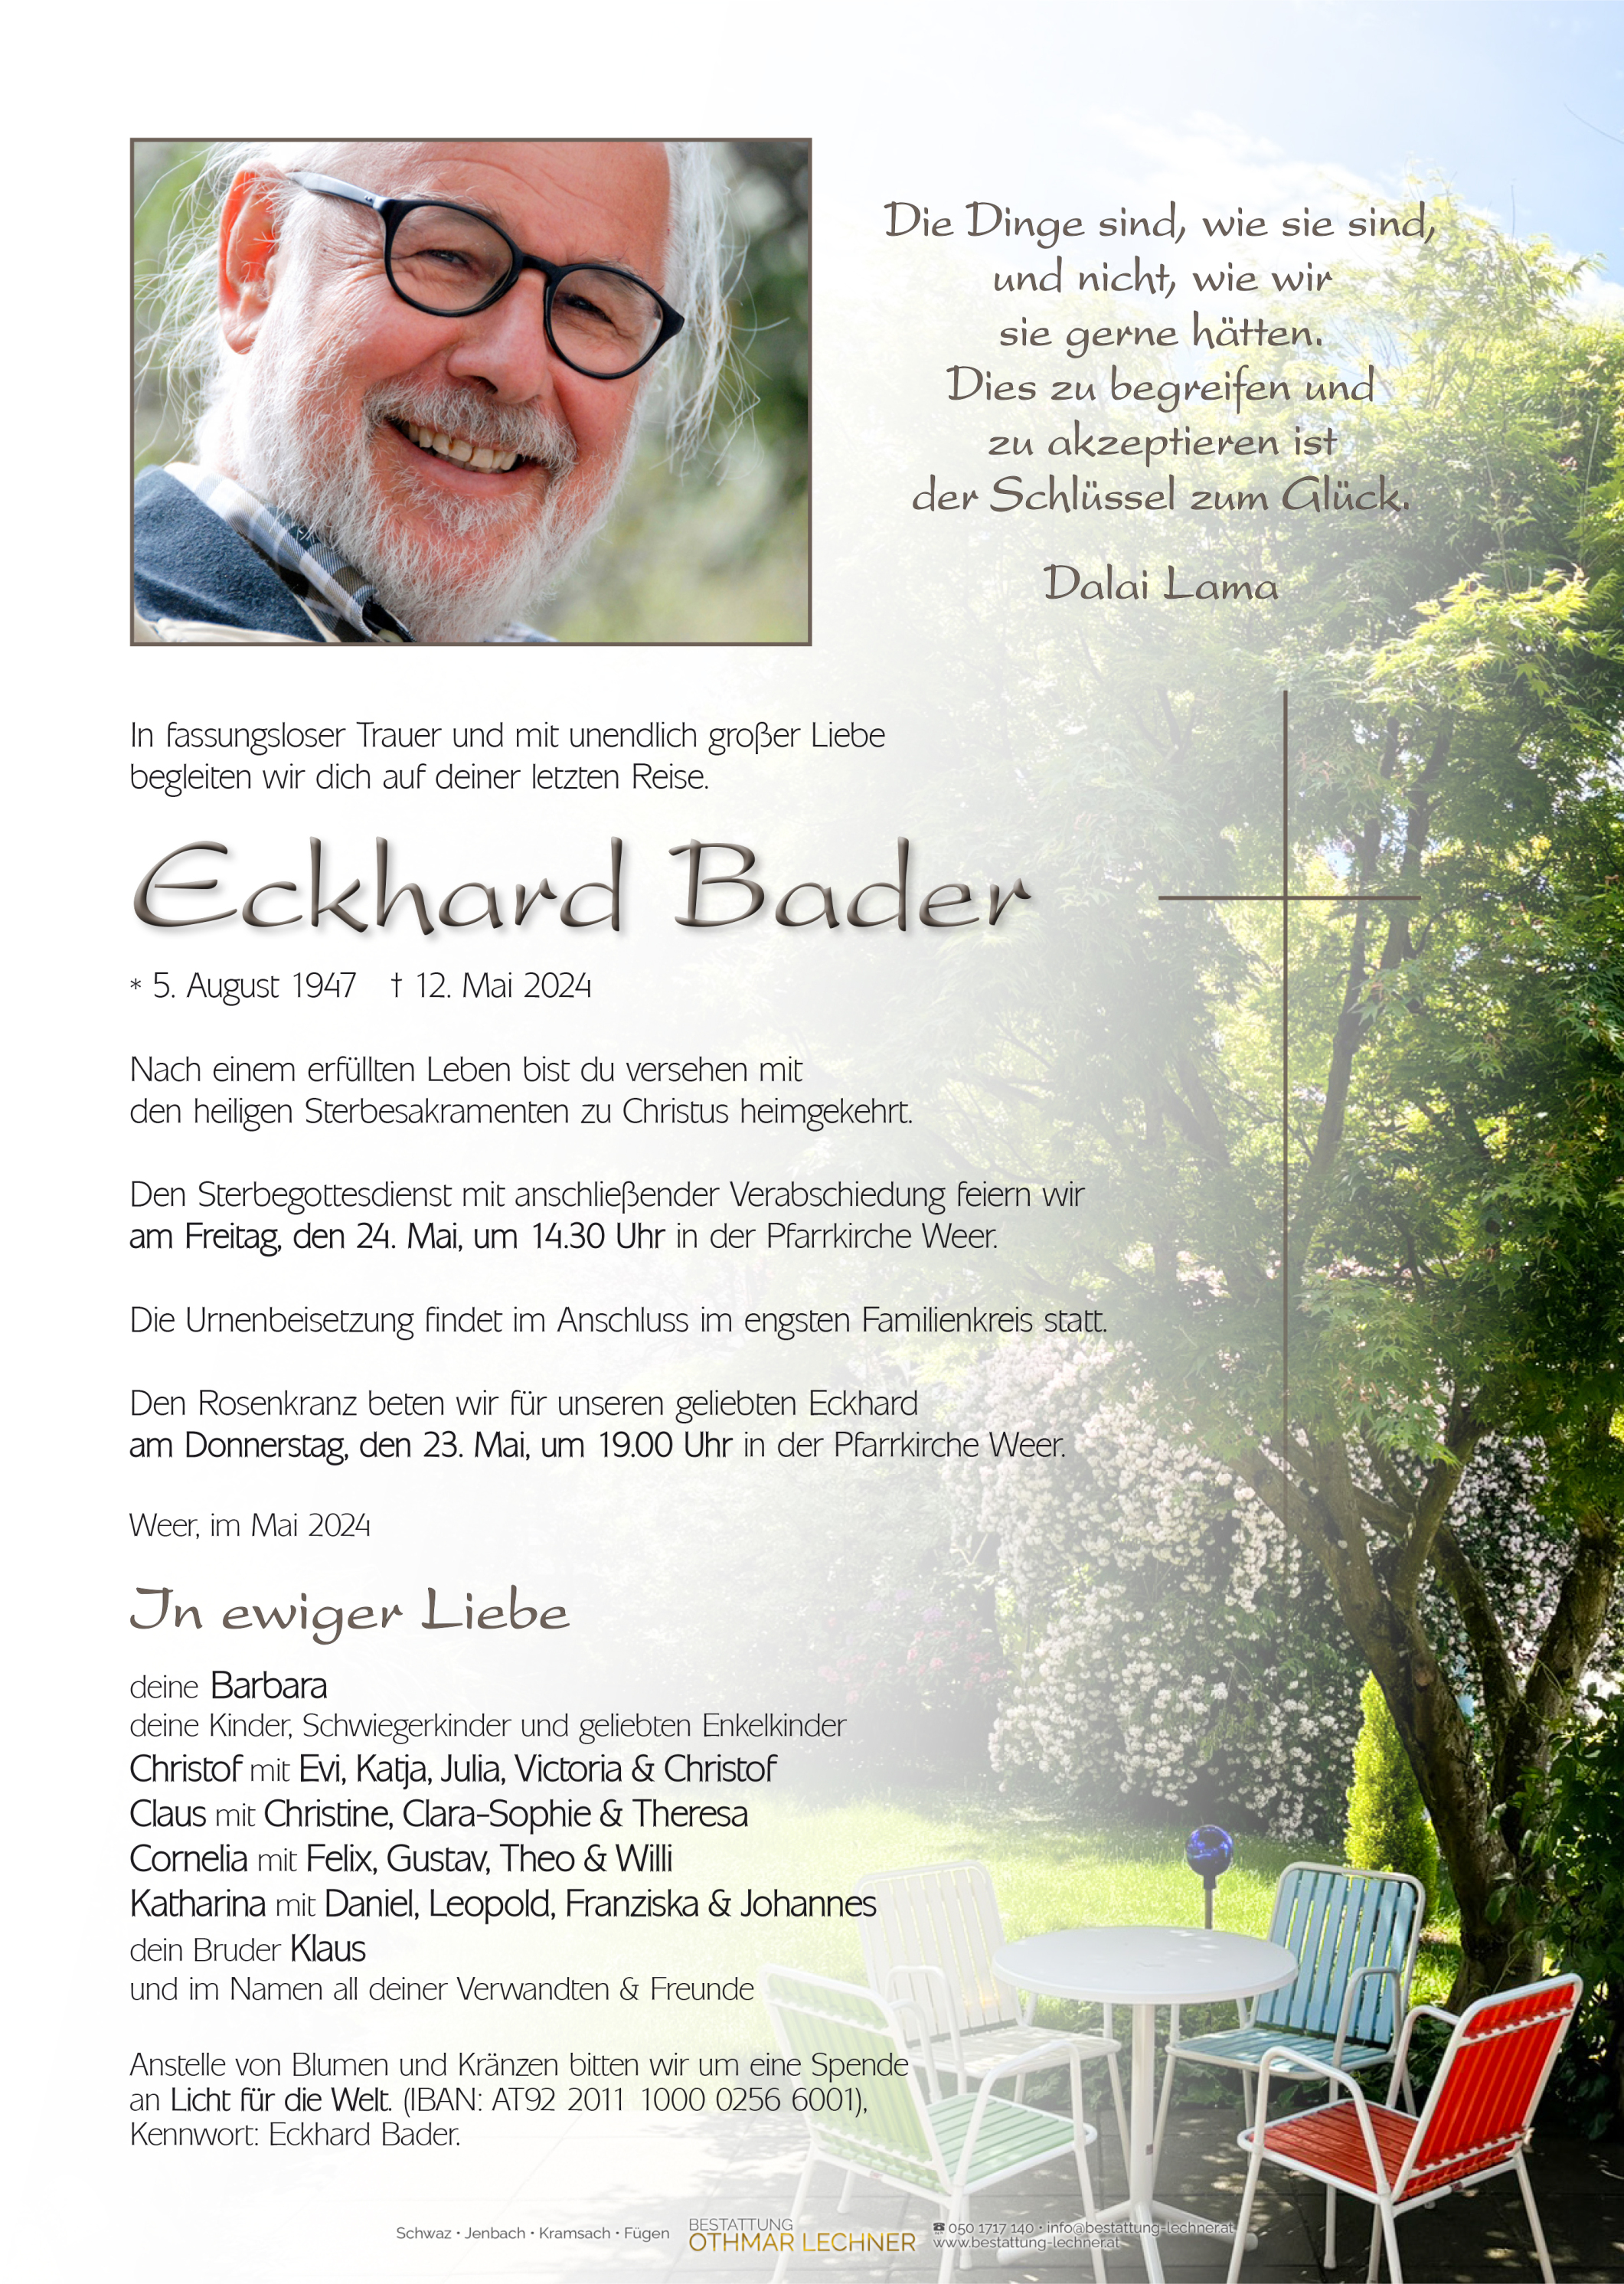 Eckhard Bader